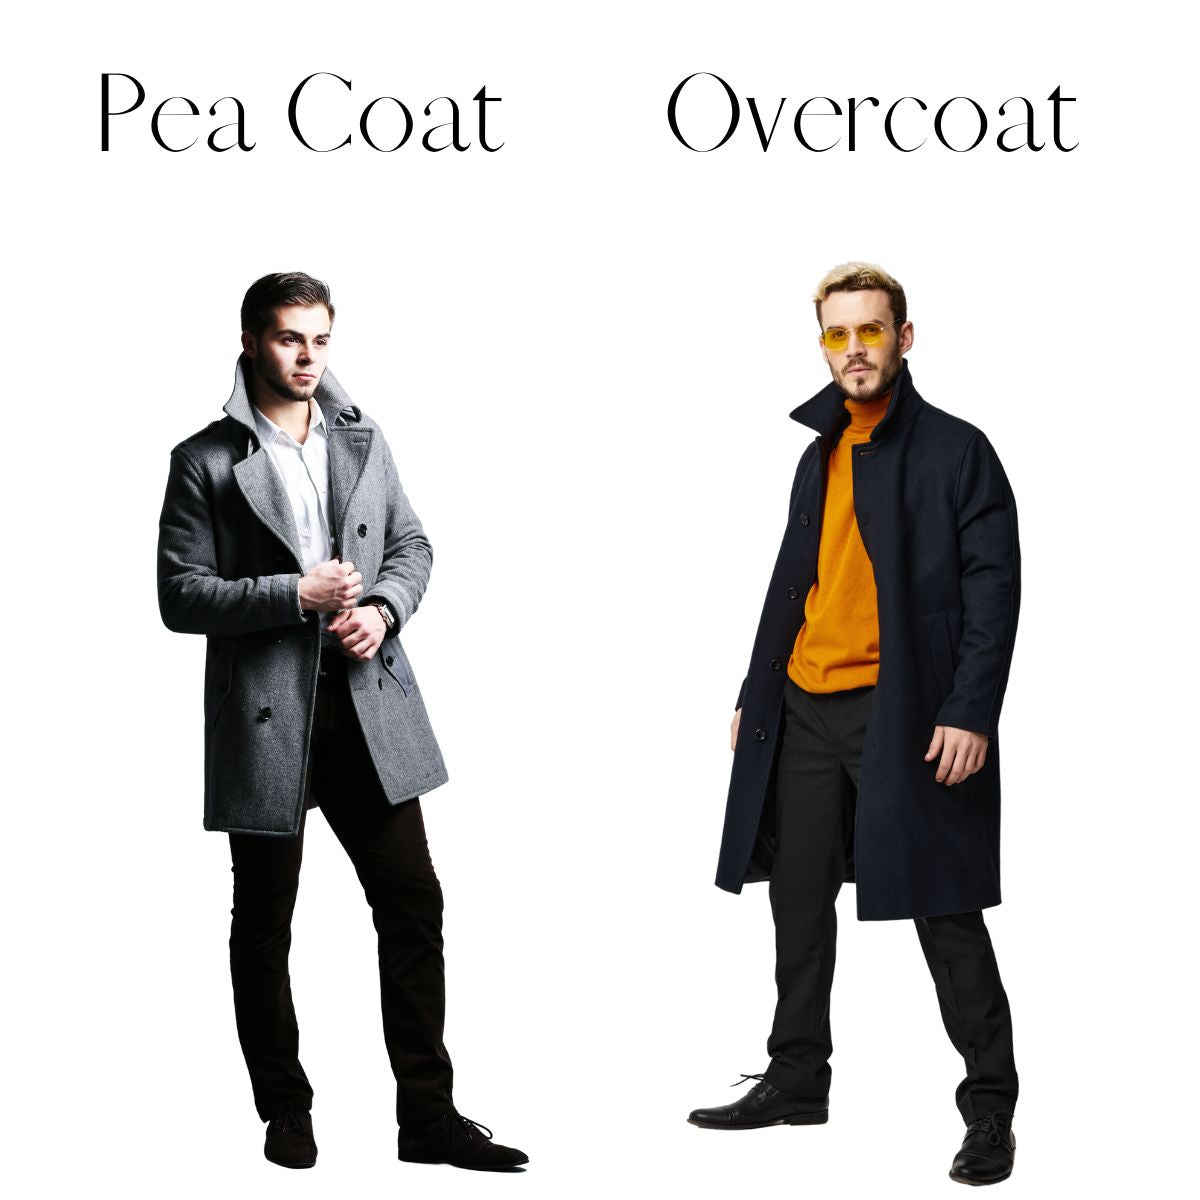 pea coat vs overcoat